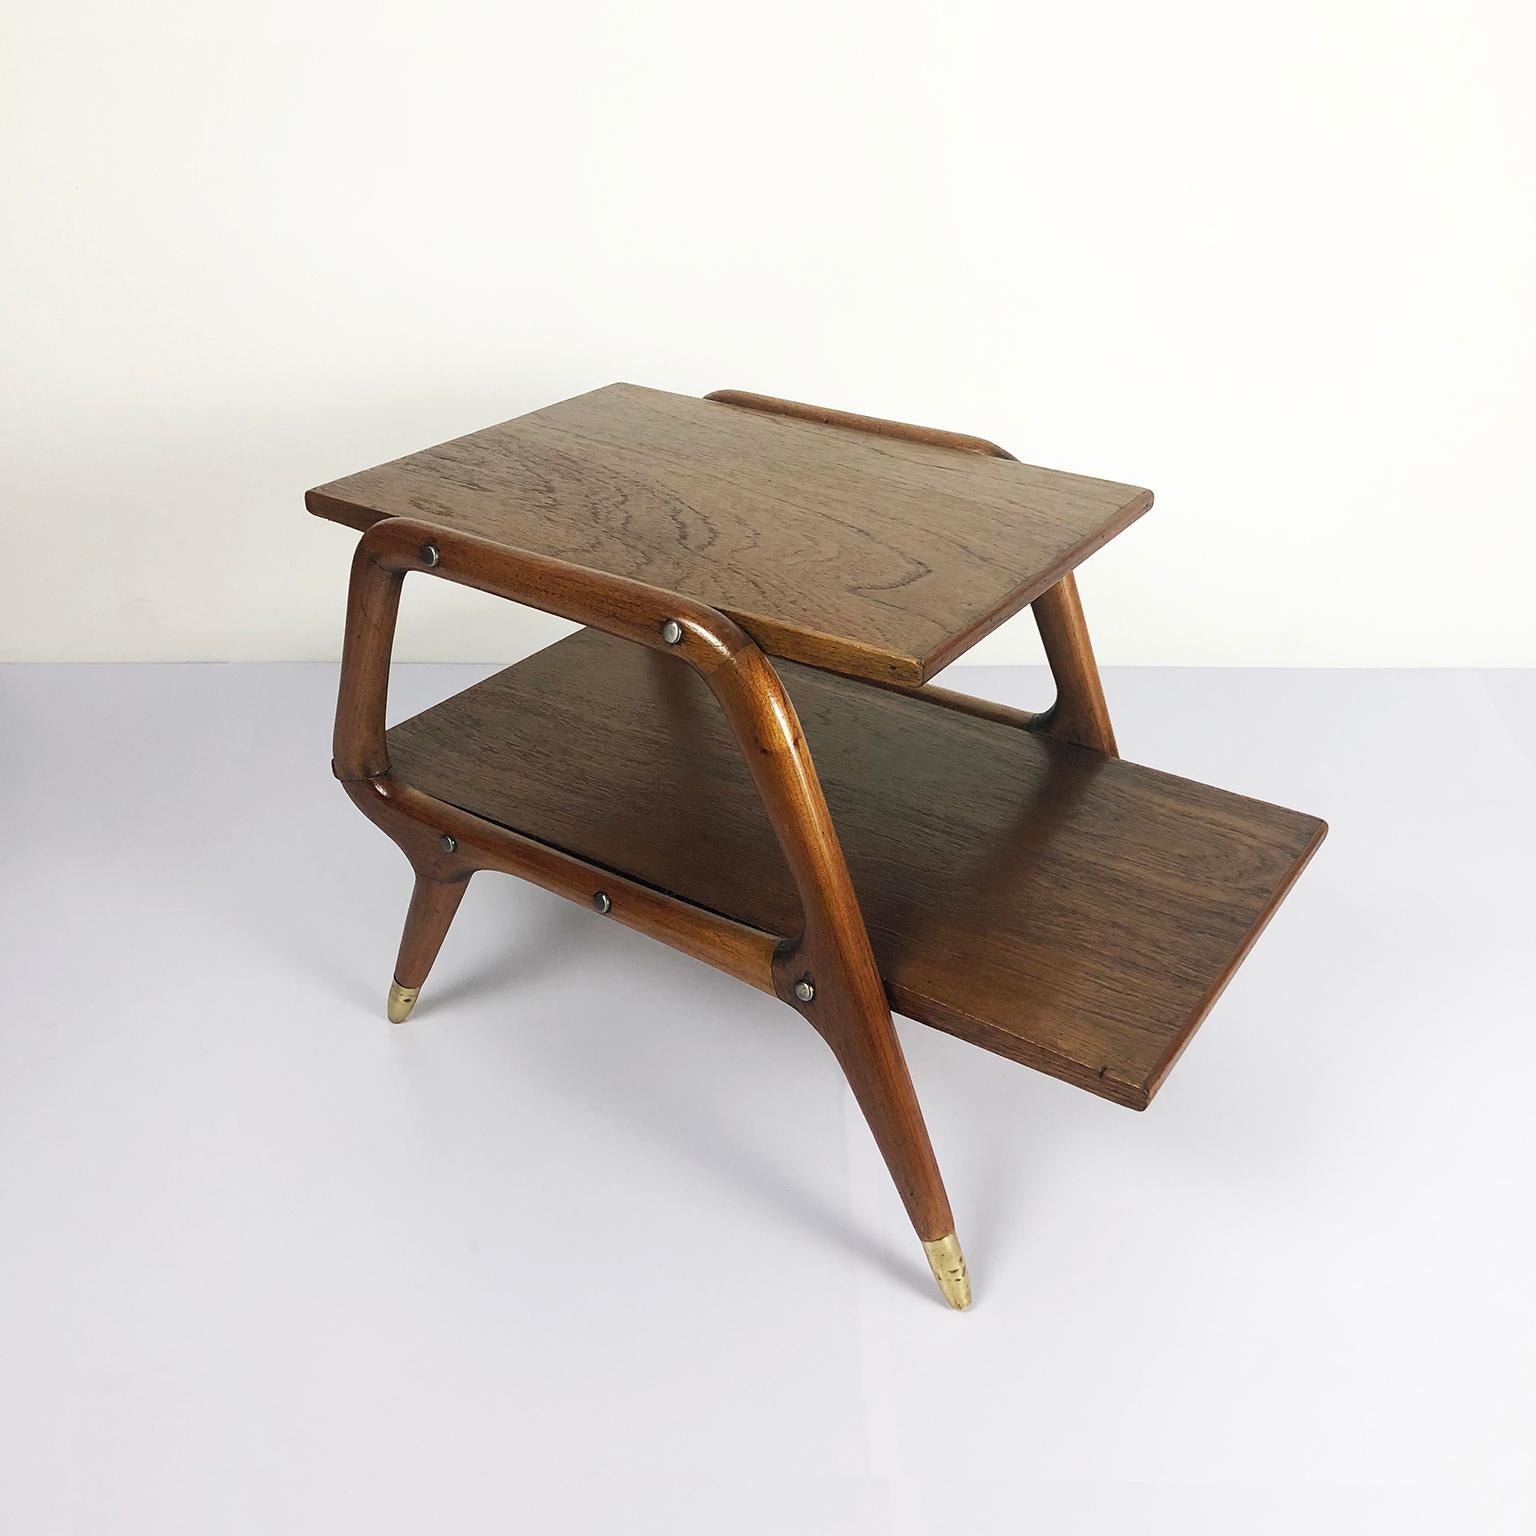 We offer this rare Eugenio Escudero midcentury telephone table in mahogany wood, circa 1950.